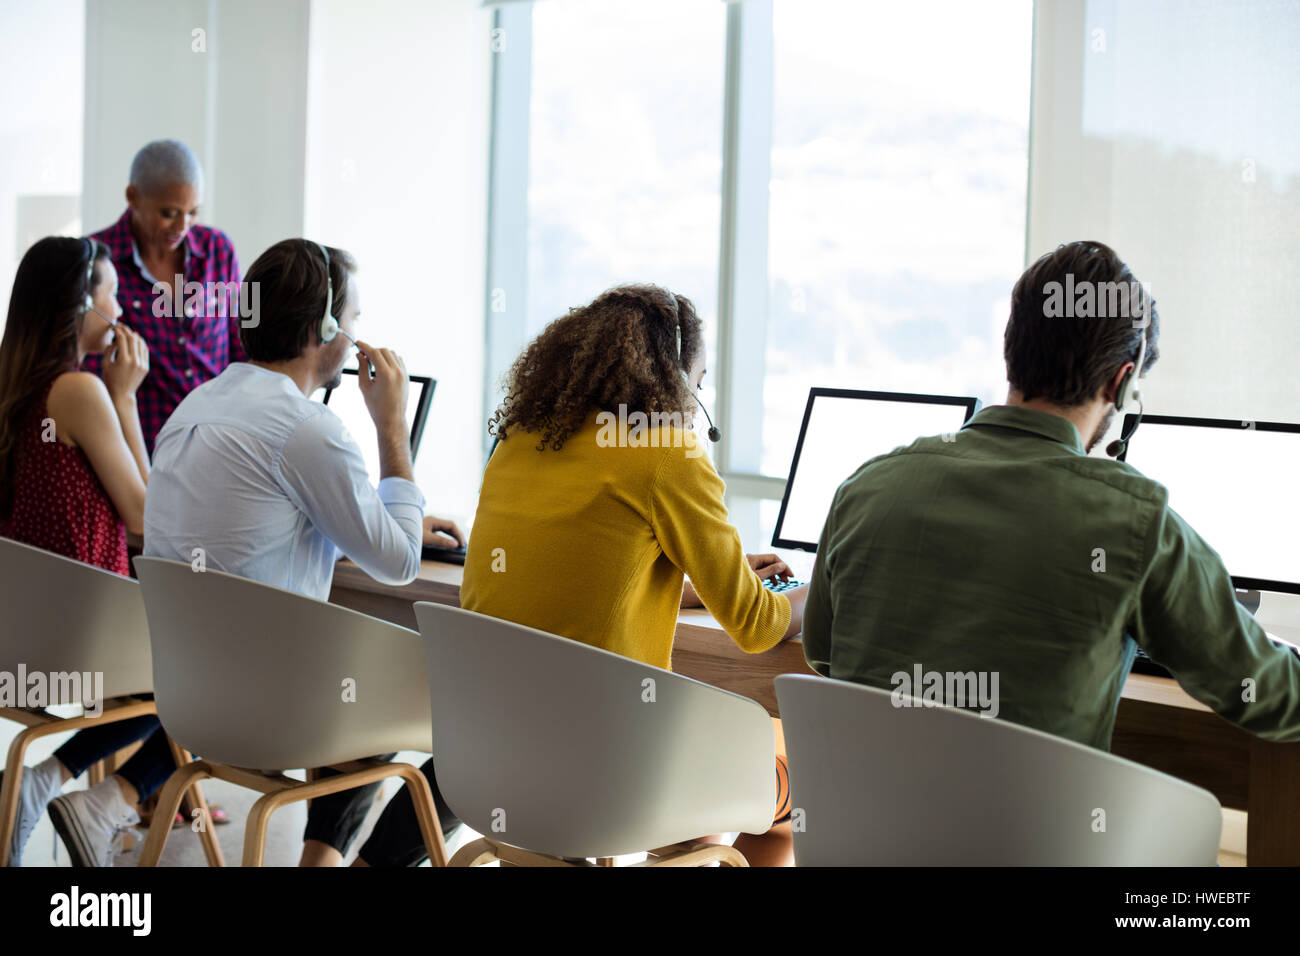 Customer Service Executive am Kopfhörer im Büro sprechen Stockfoto